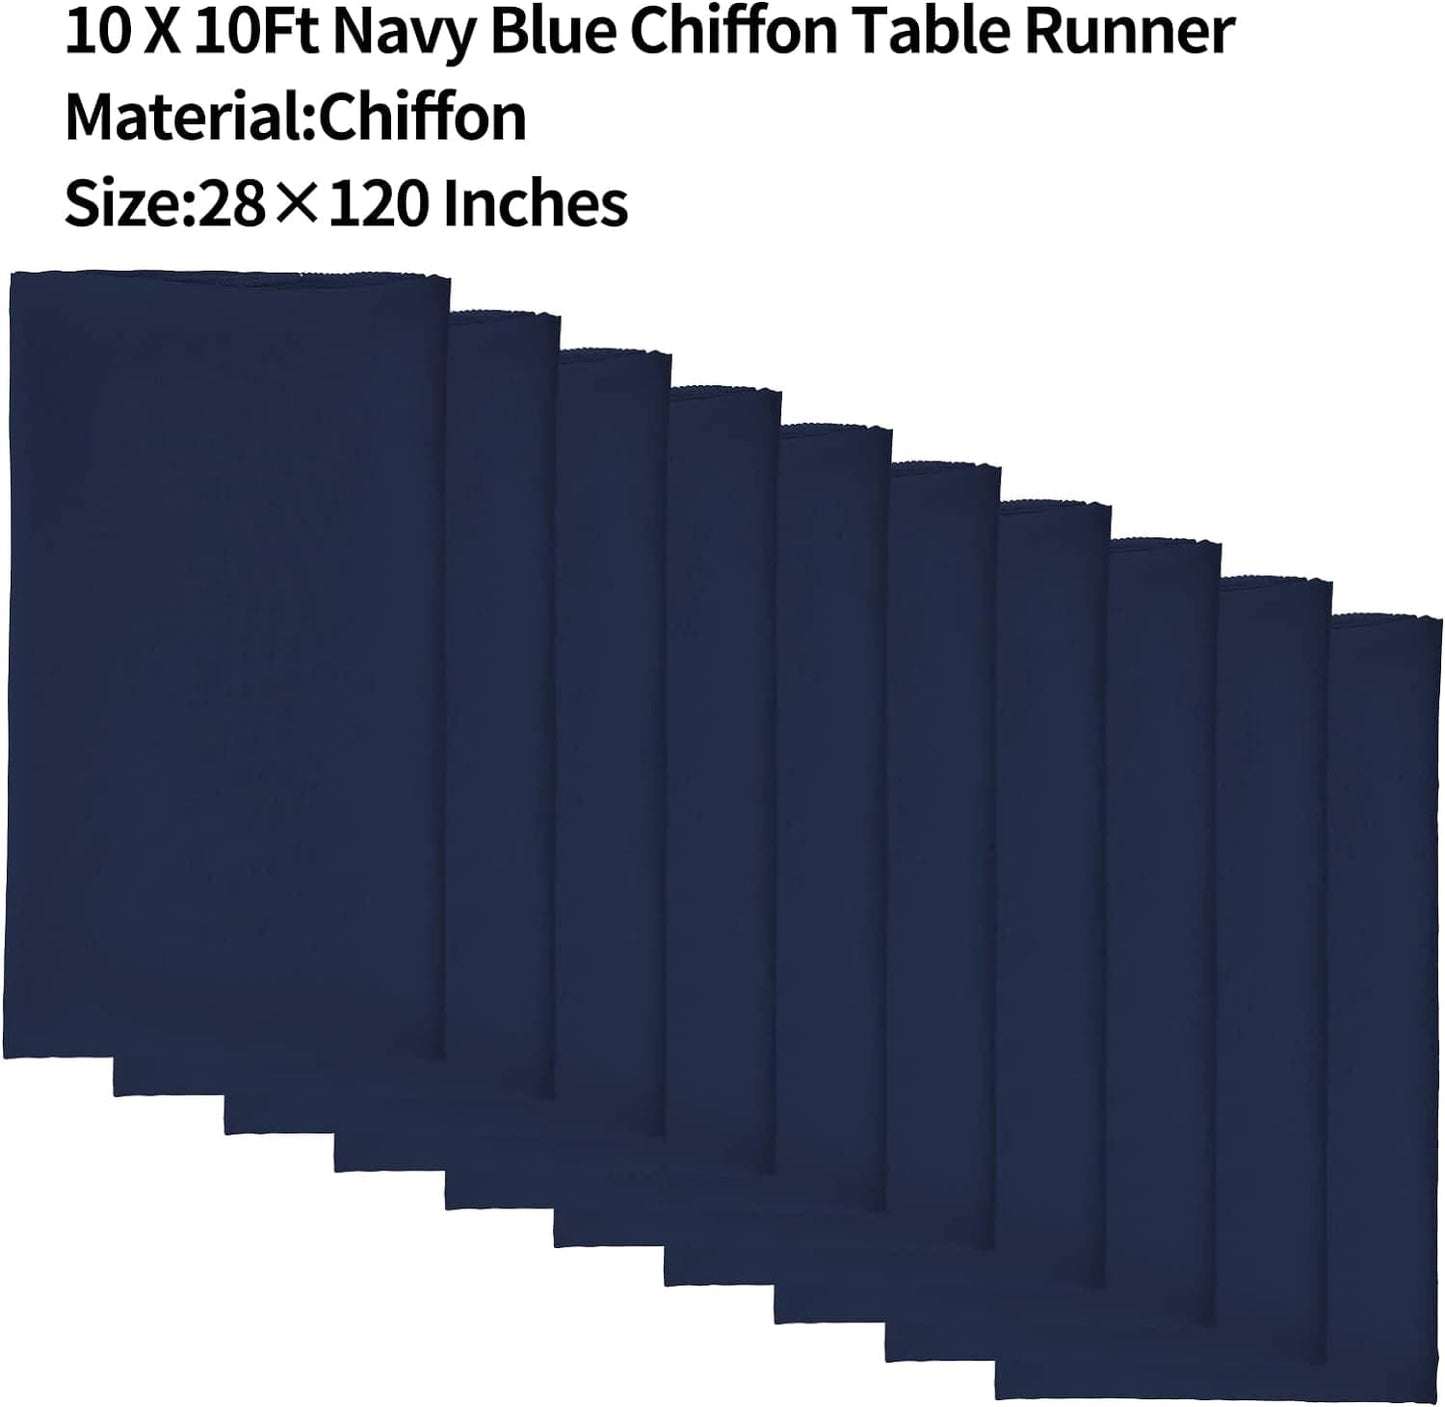 MORLIN Chiffon Table Runner 10Ft -28x120 Inches